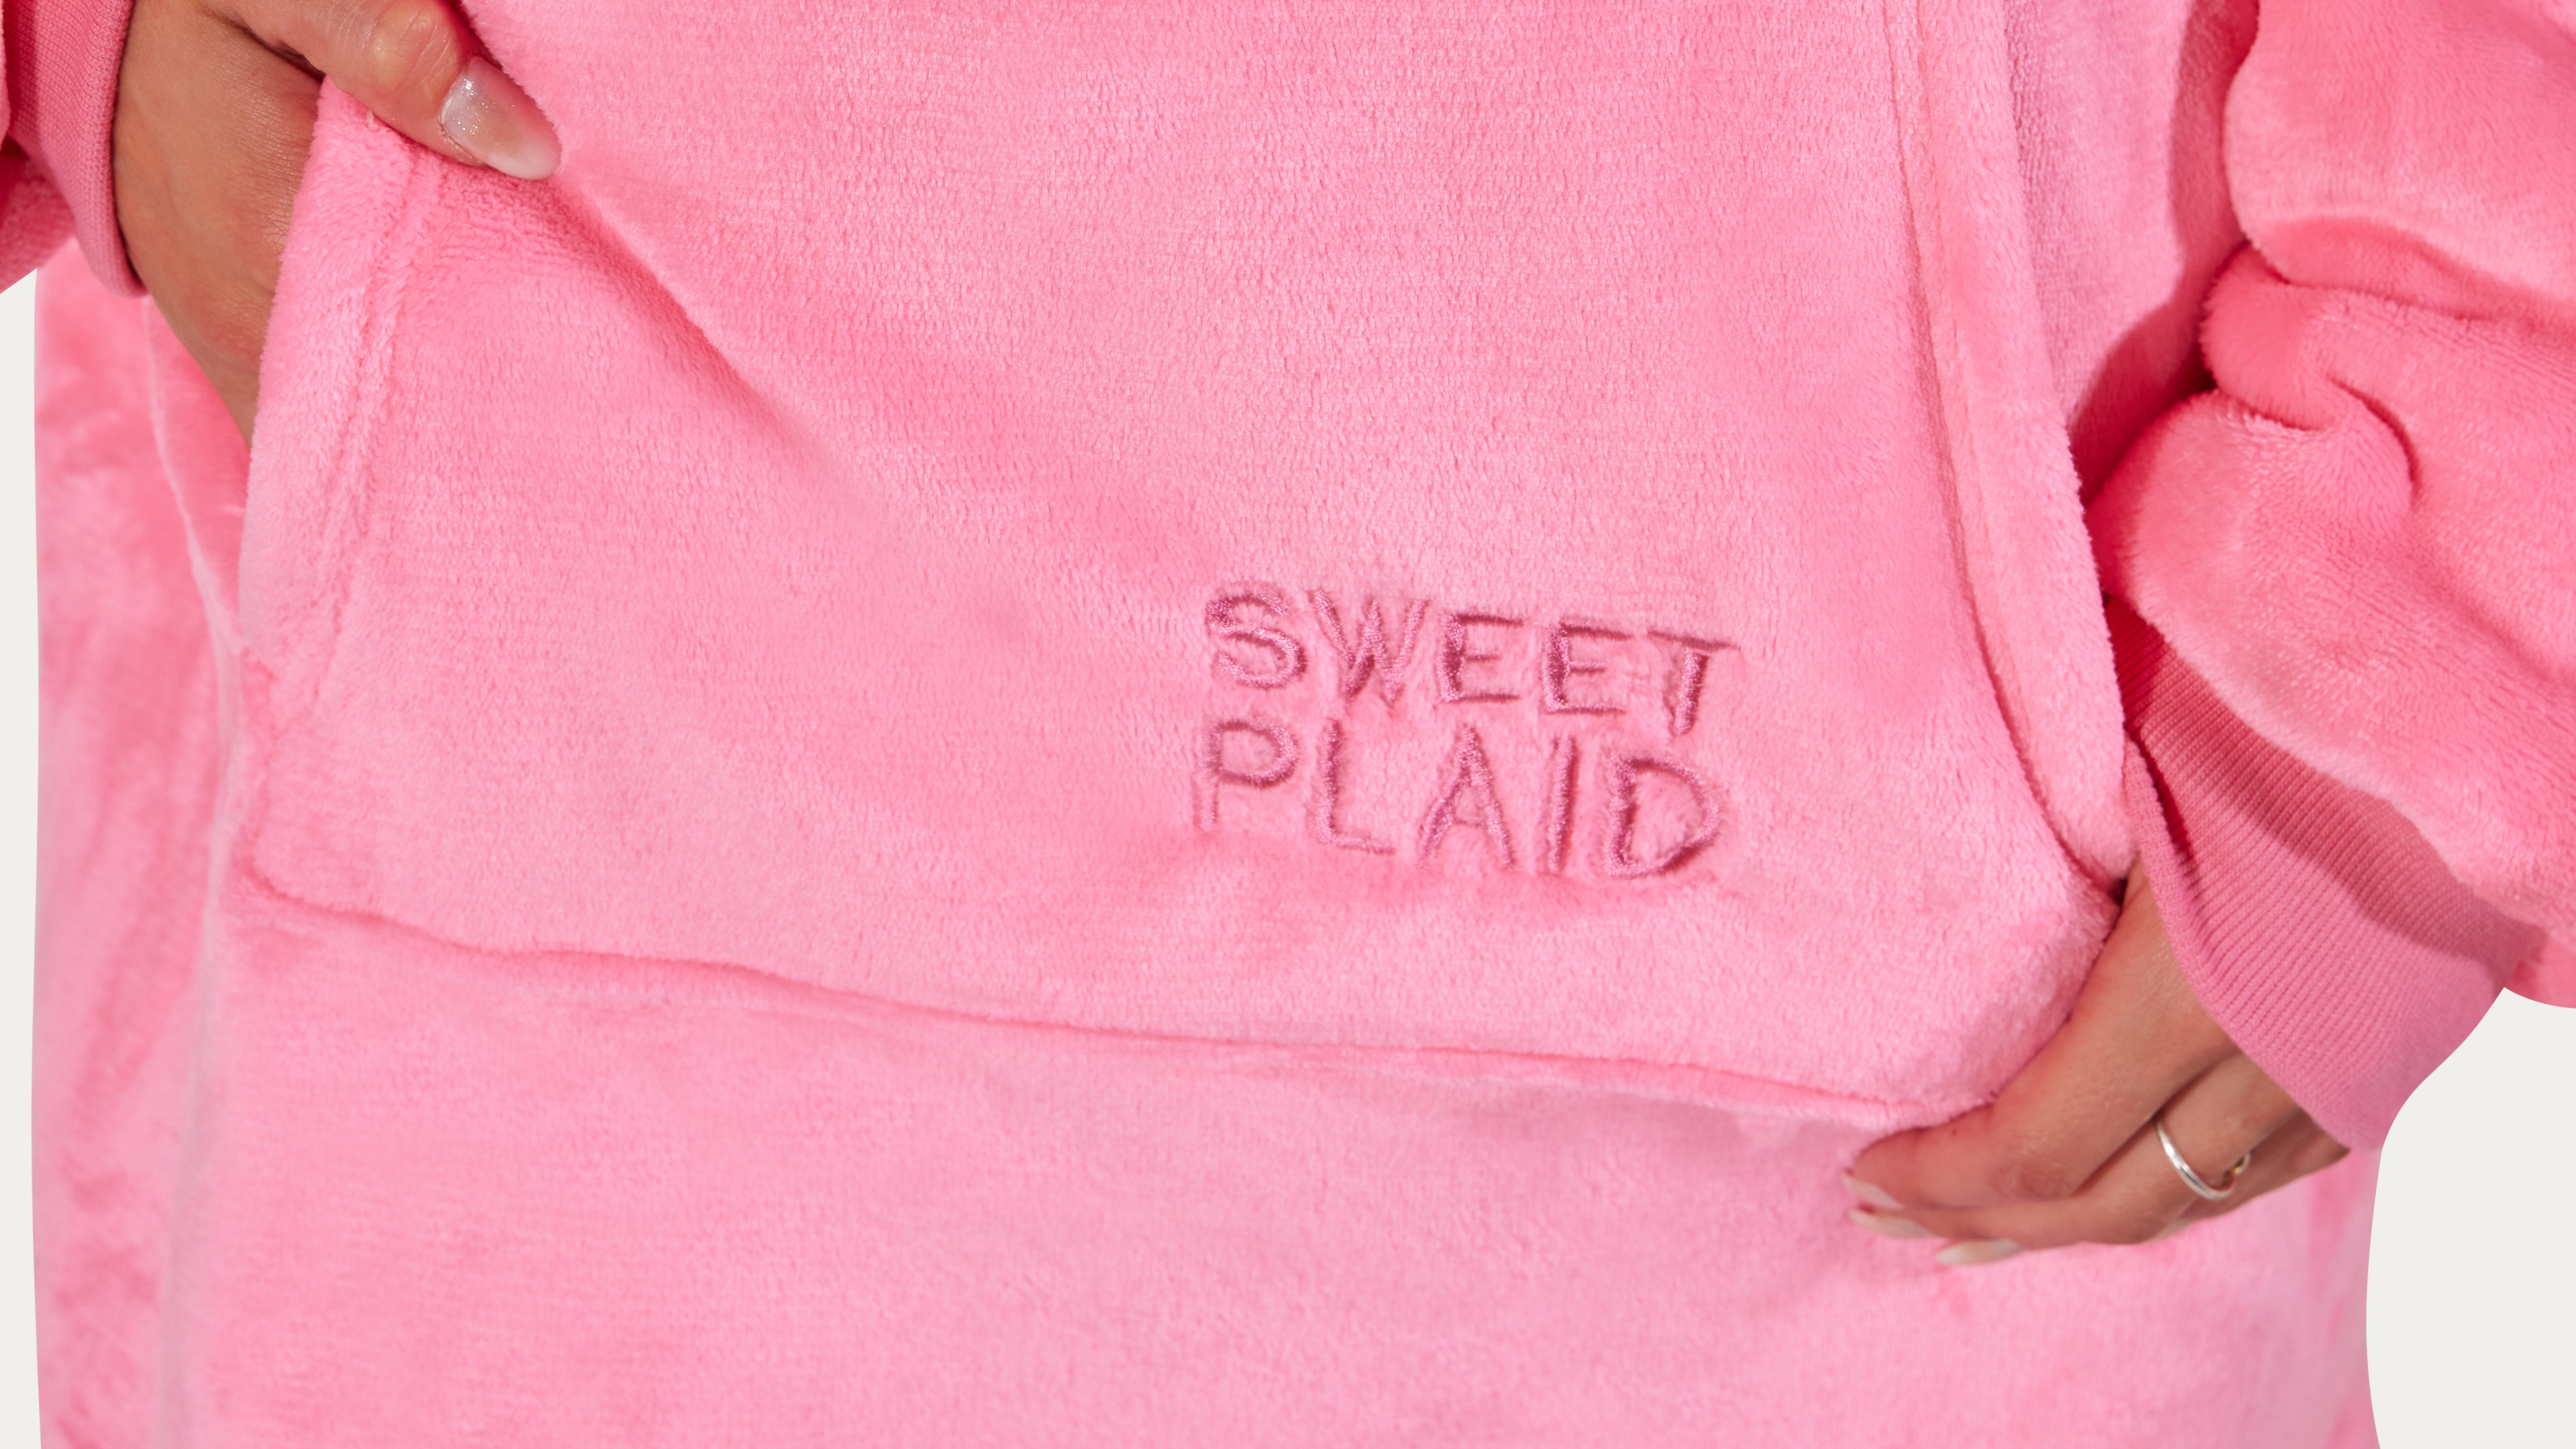 Sac de Protection au Lavage SweetPlaid™ – Sweet Plaid™